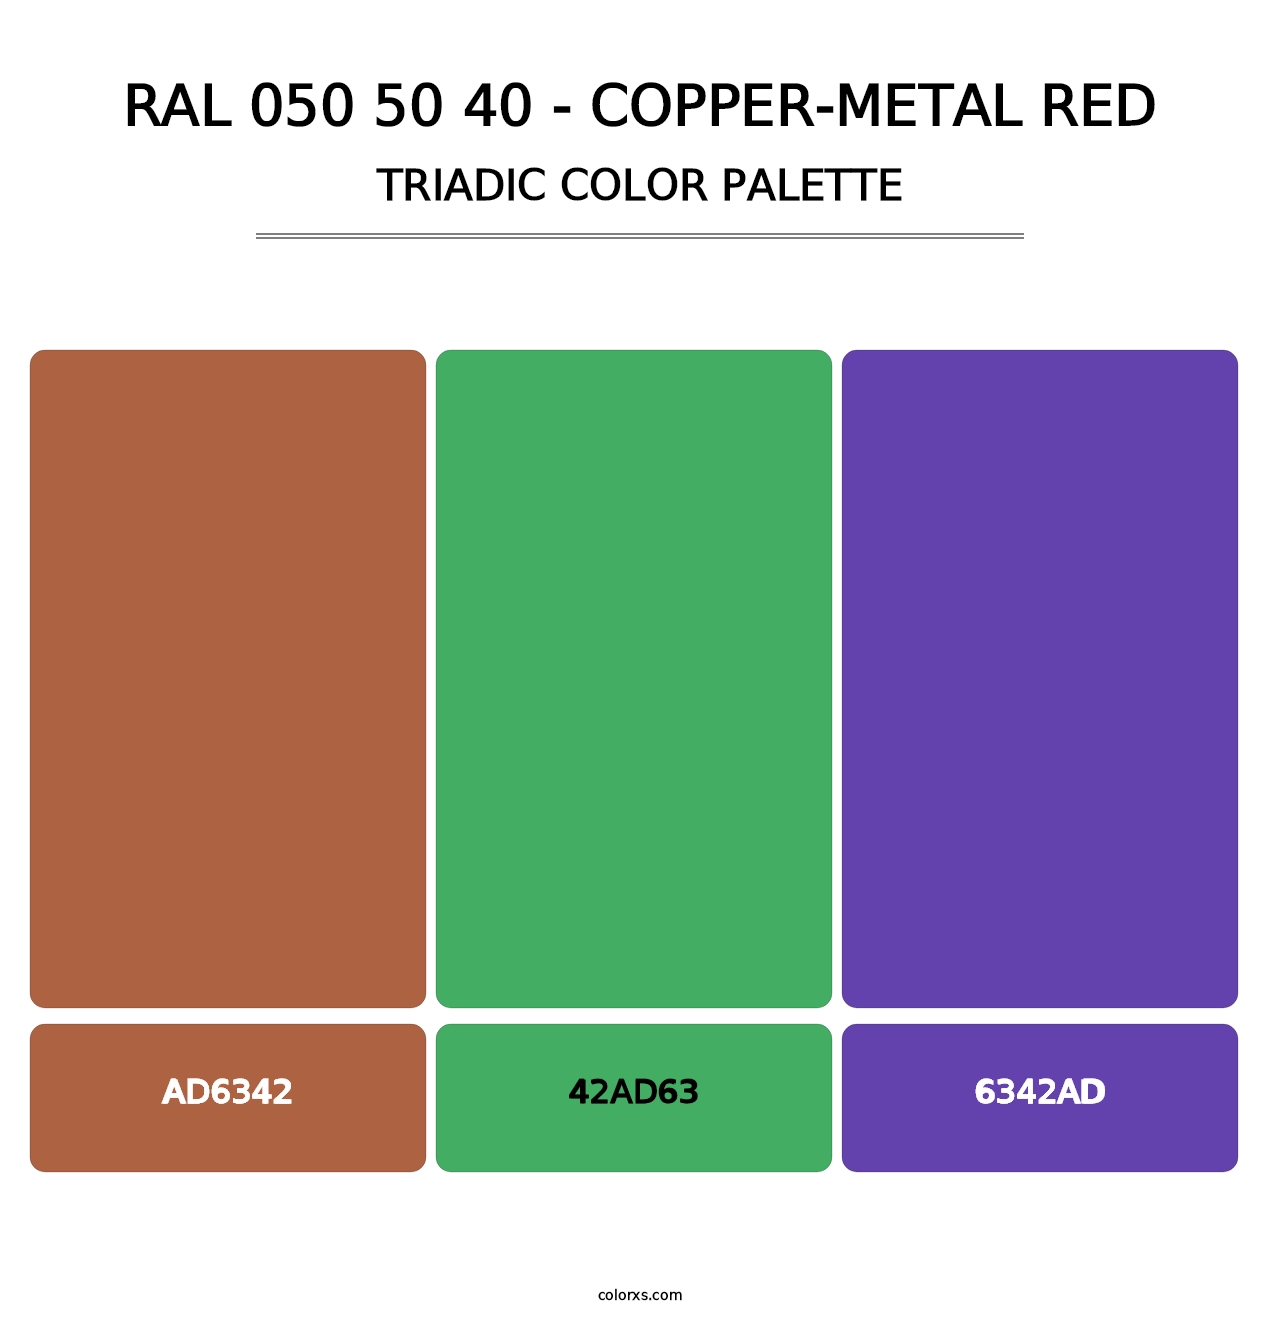 RAL 050 50 40 - Copper-Metal Red - Triadic Color Palette